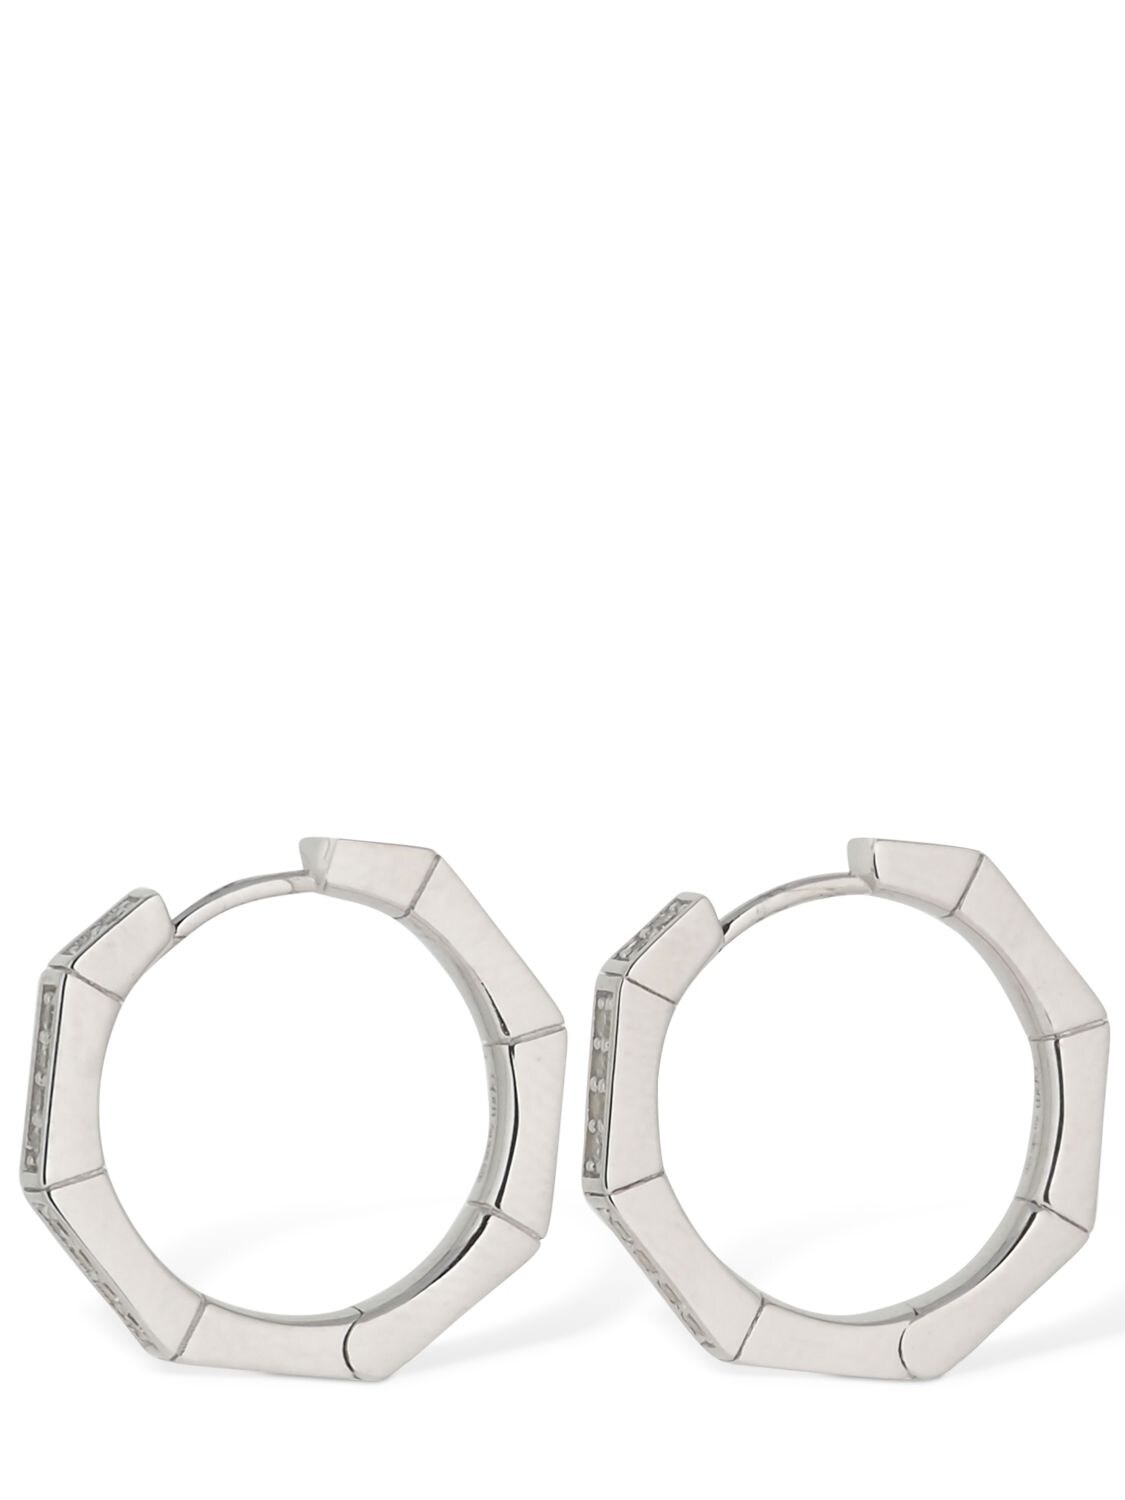 Apm Monaco Octagonal Hoop Earrings In Silver